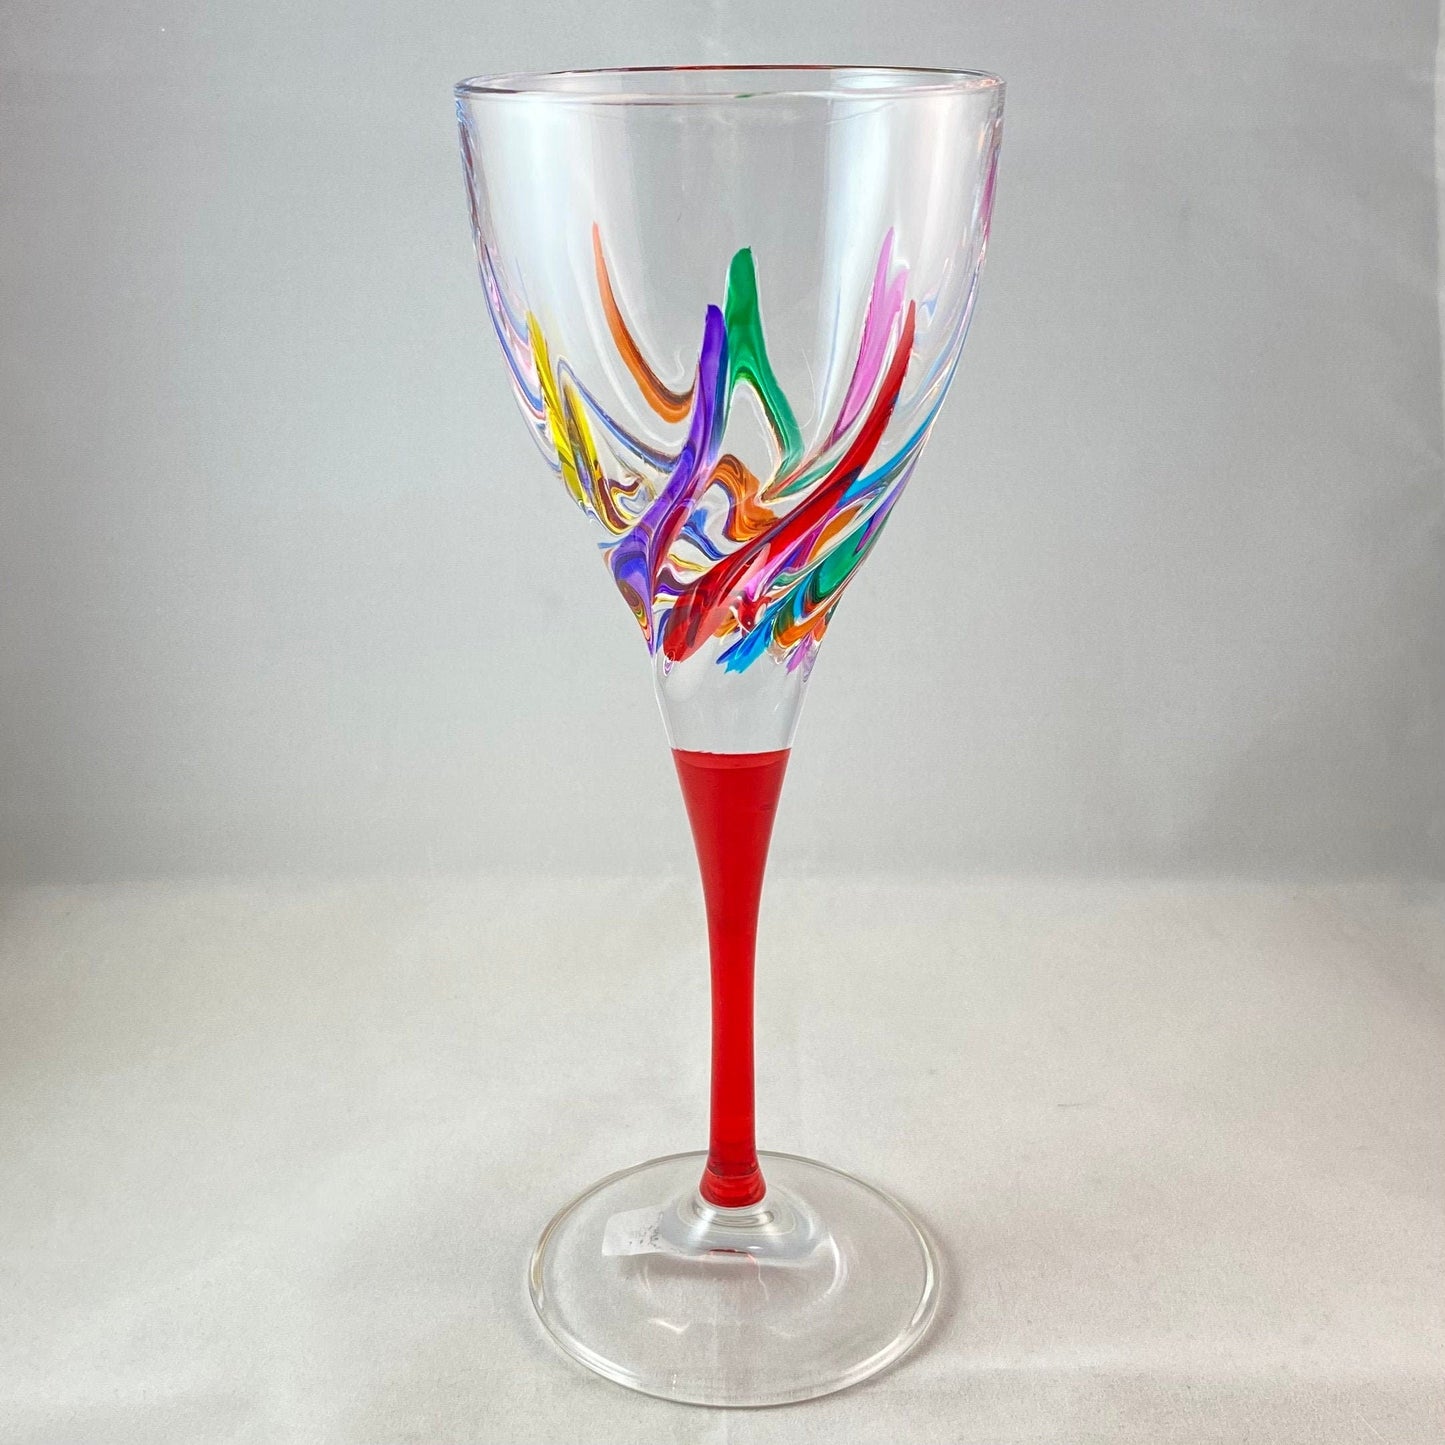 Red Stem Venetian Glass Wine Glass - Handmade in Italy, Colorful Murano Glass